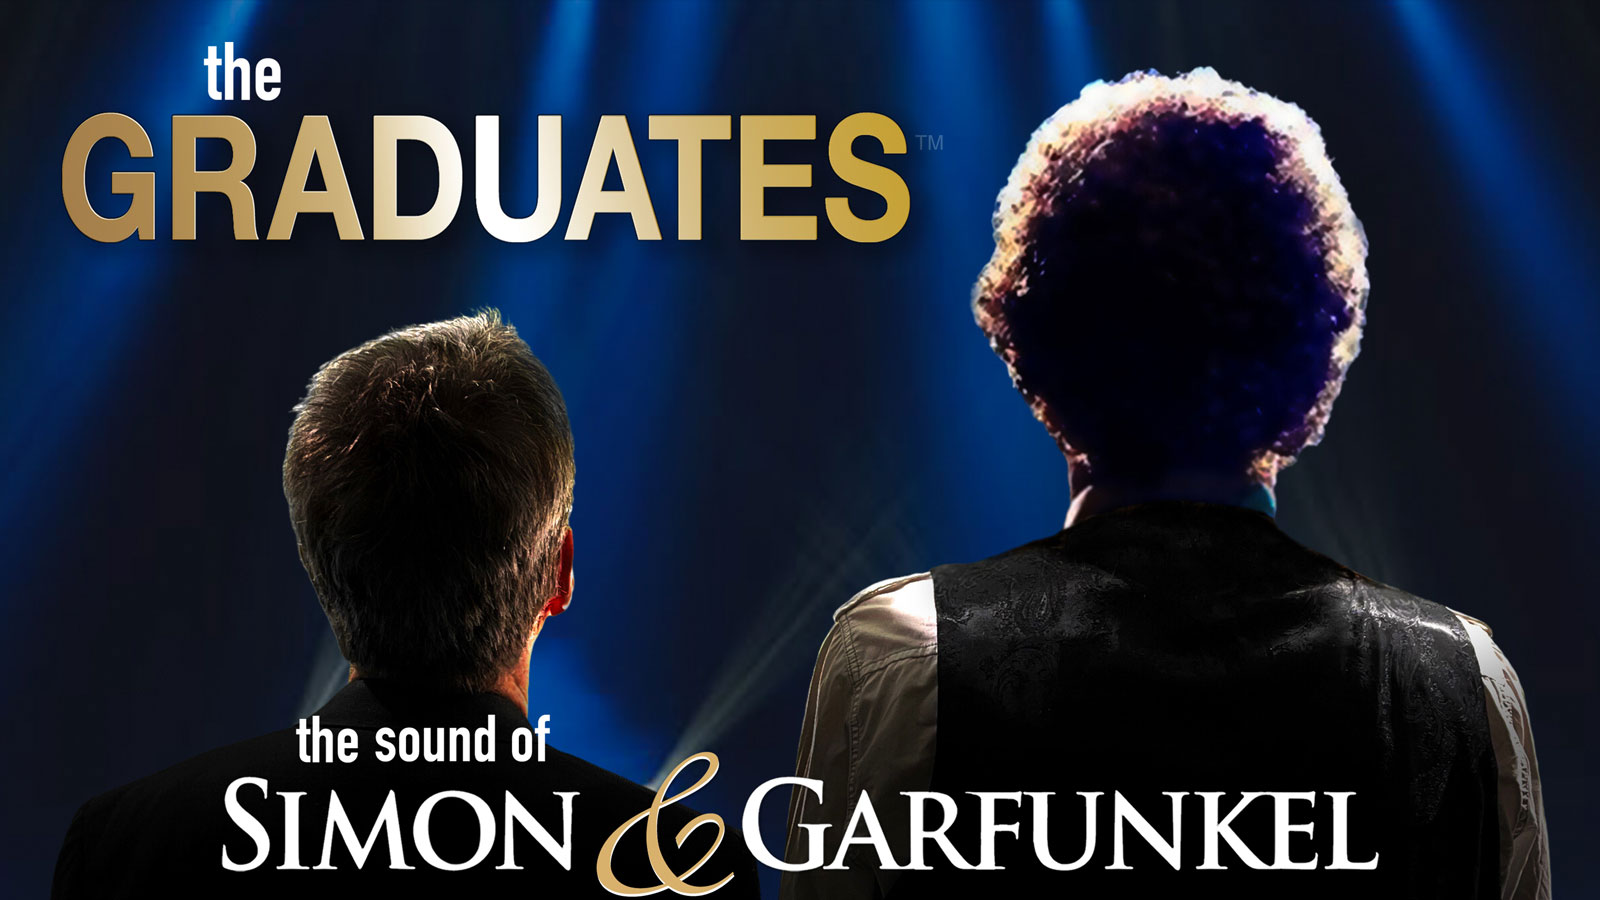 Silhouette of Simon & Garfunkel with text The Graduates